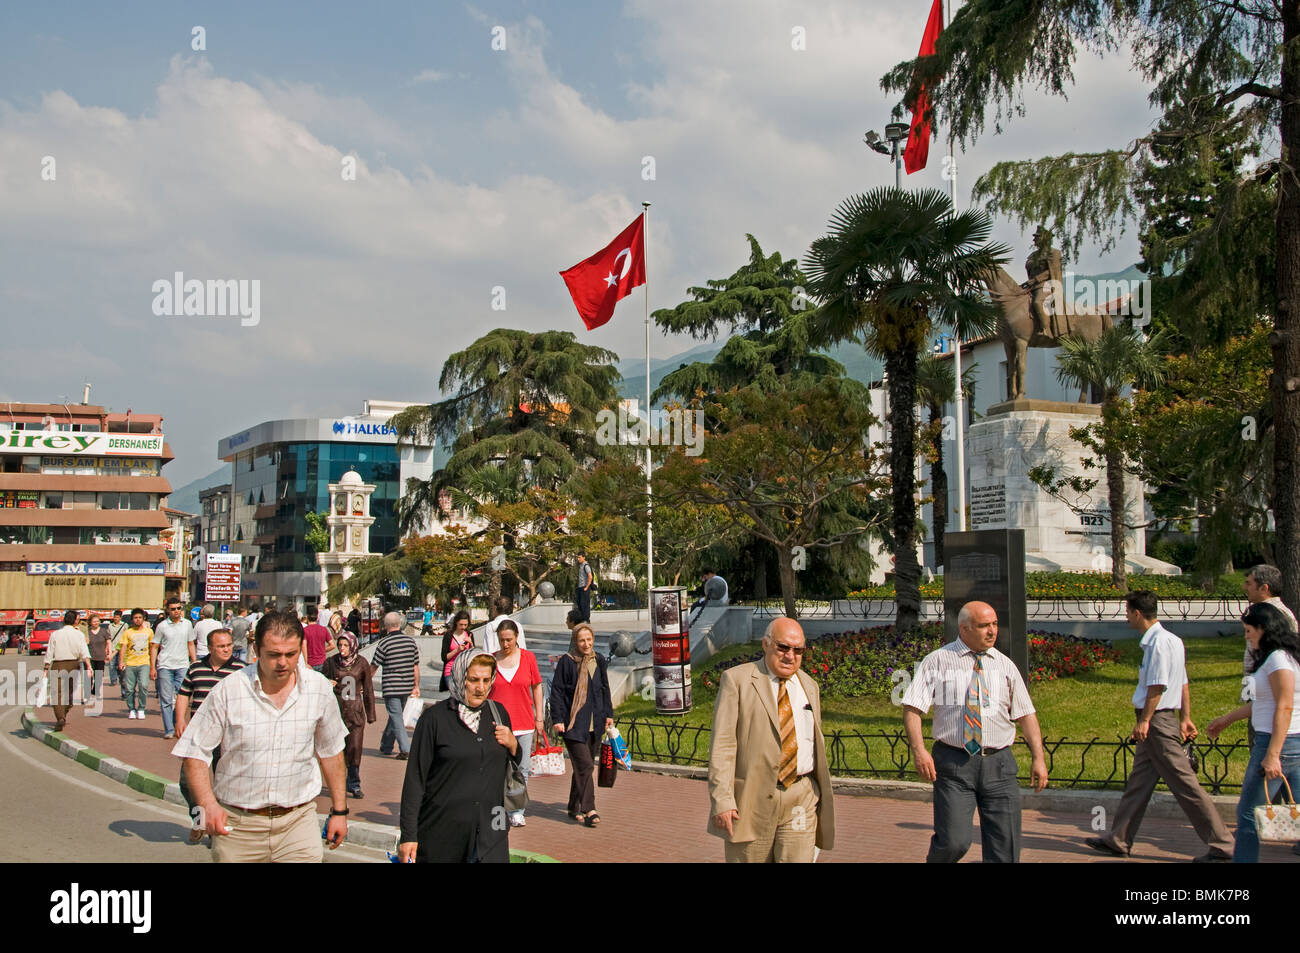 Bursa Turkey Ataturk Cad Cadessi town City Centre Anatolia Stock Photo